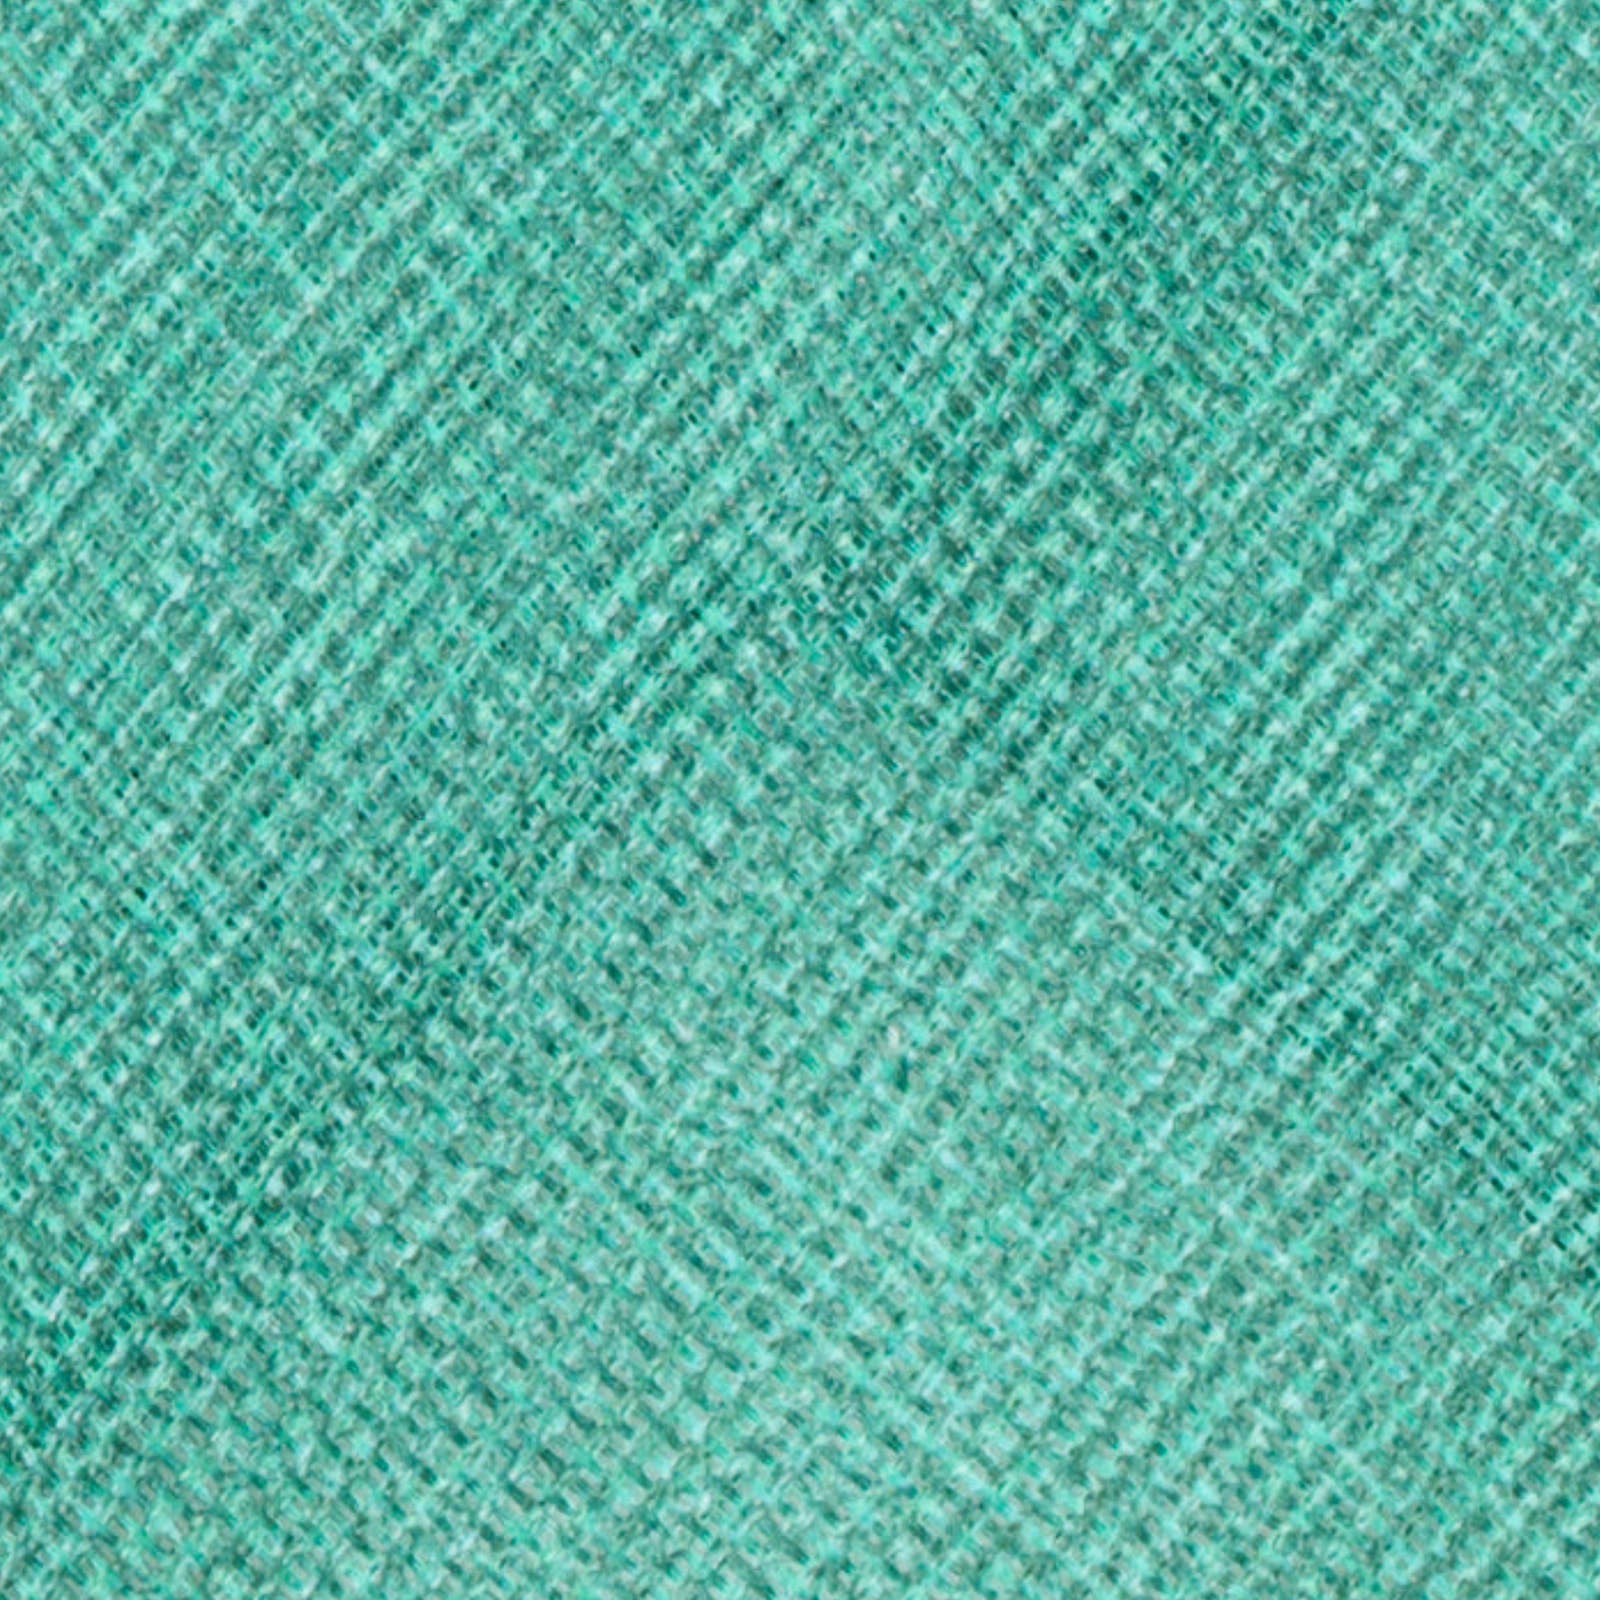 KITON Light Green Seven Fold Silk-Linen Hopsack Tie NEW